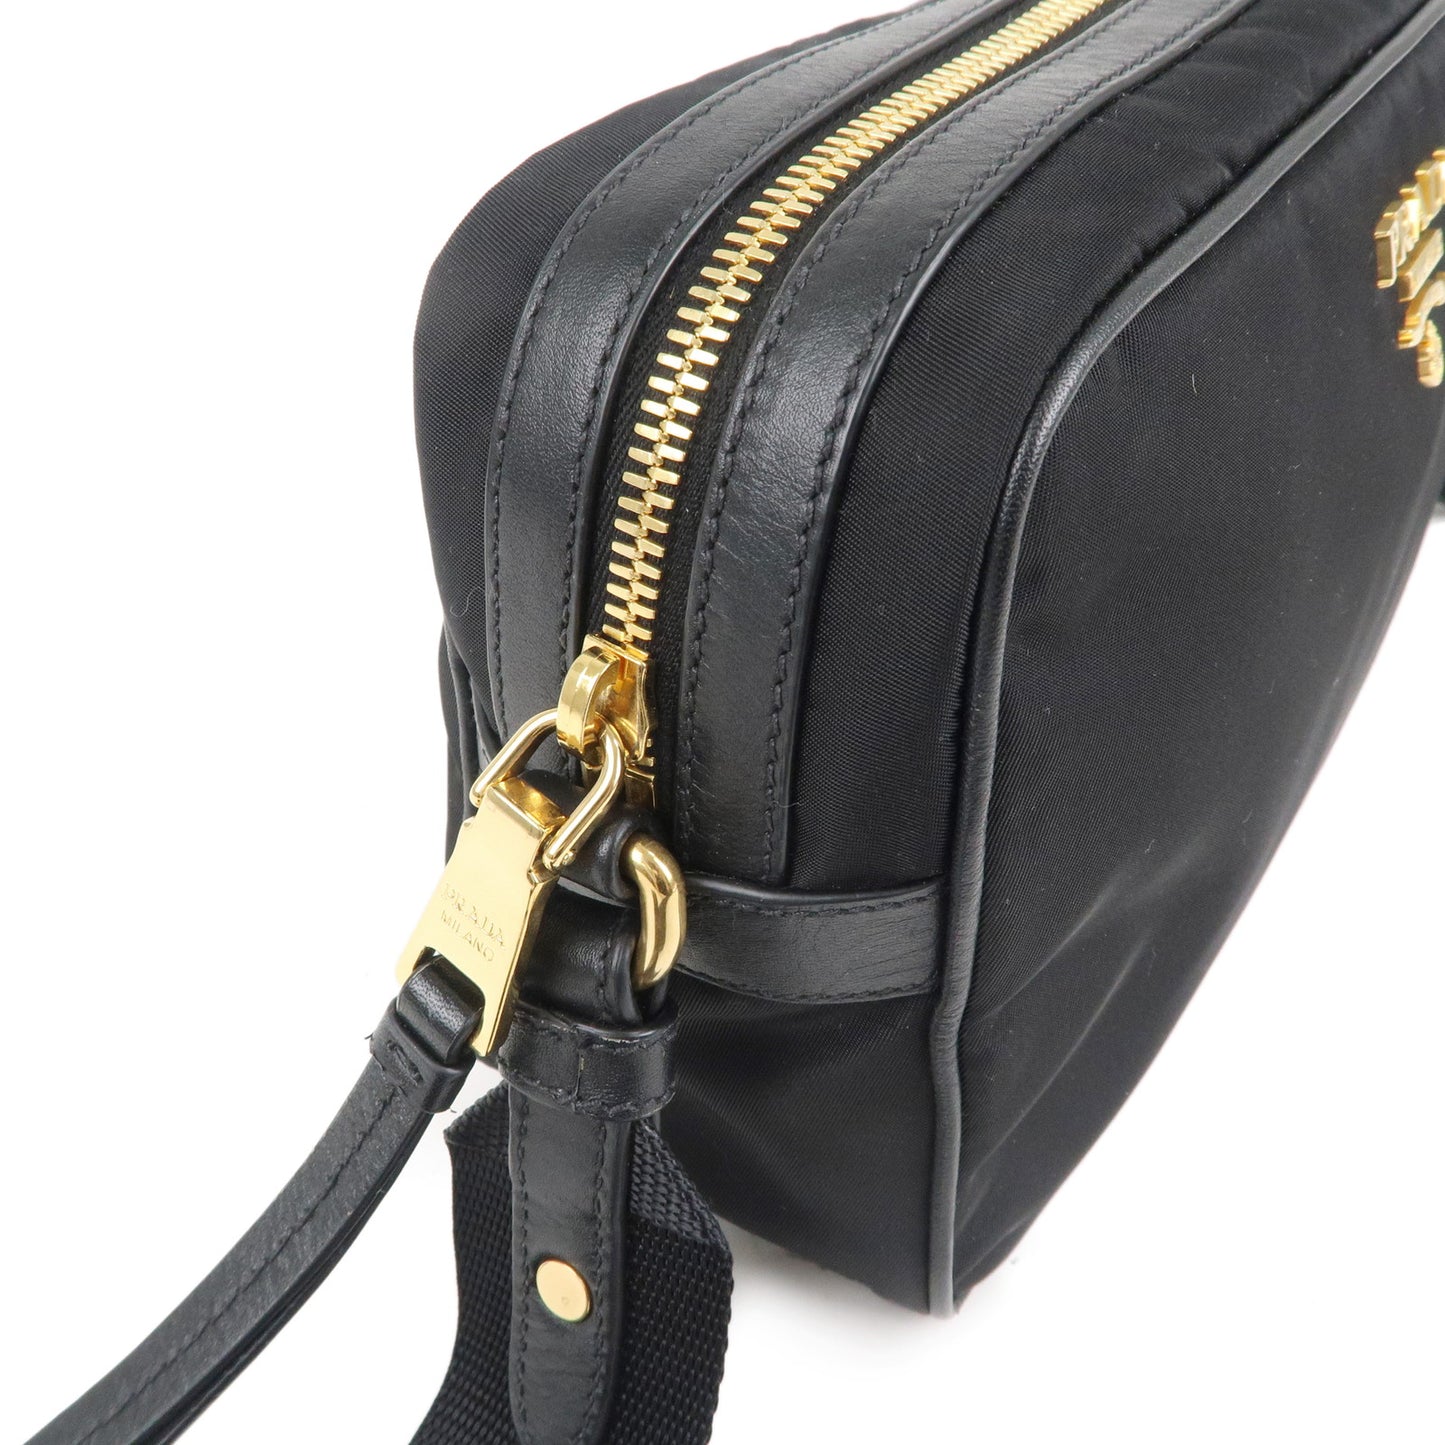 PRADA Logo Nylon Leather Shoulder Bag NERO Black Gold 1BH089